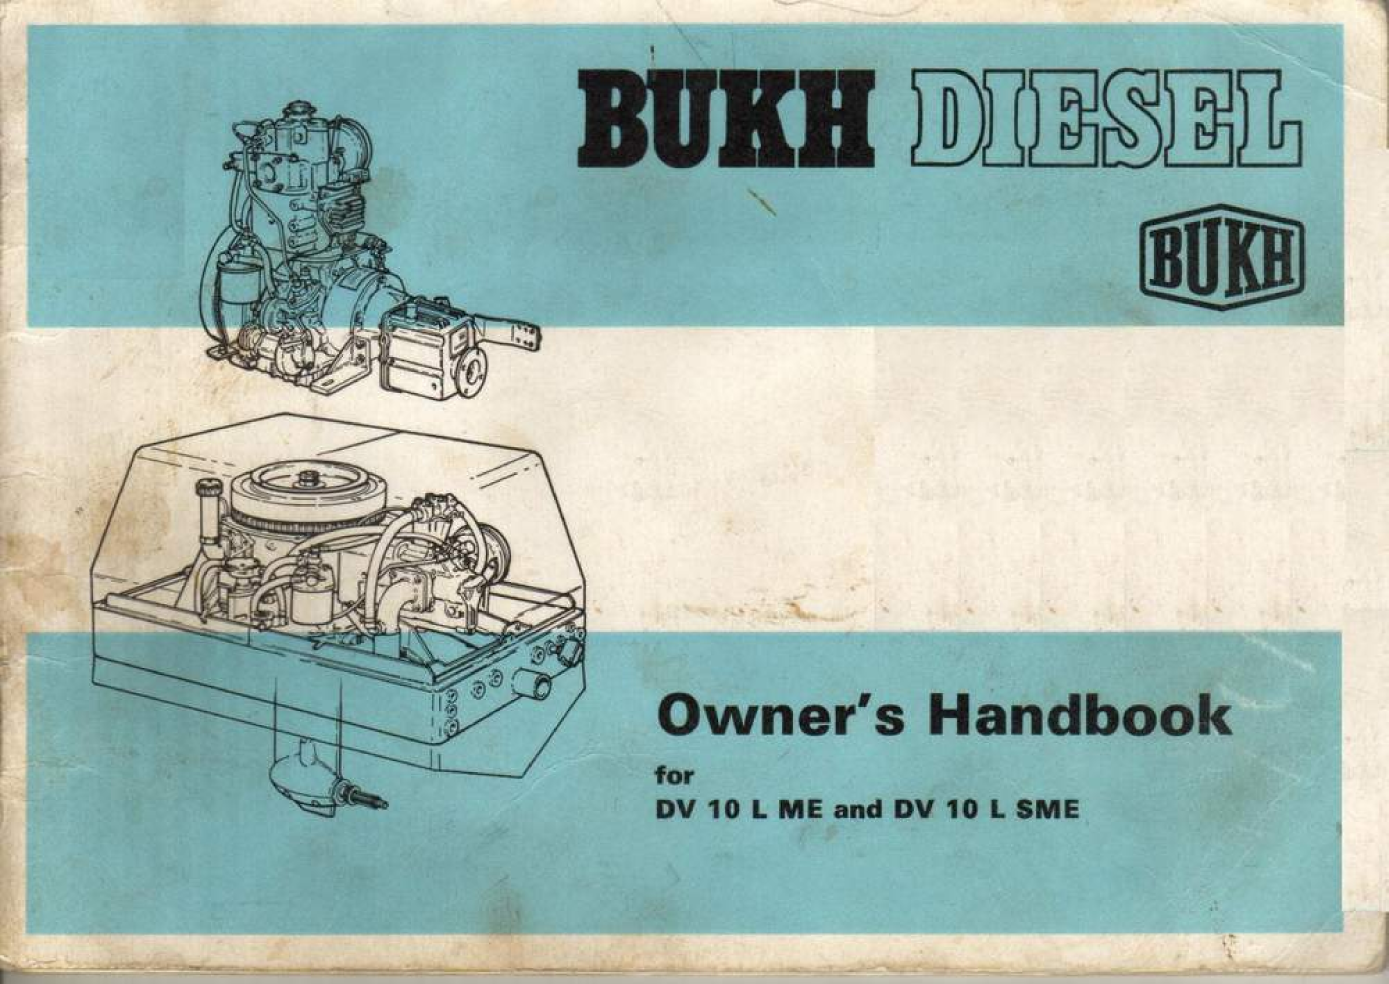  Bukh Dv 10 L  Owners  Handbook manual page 1